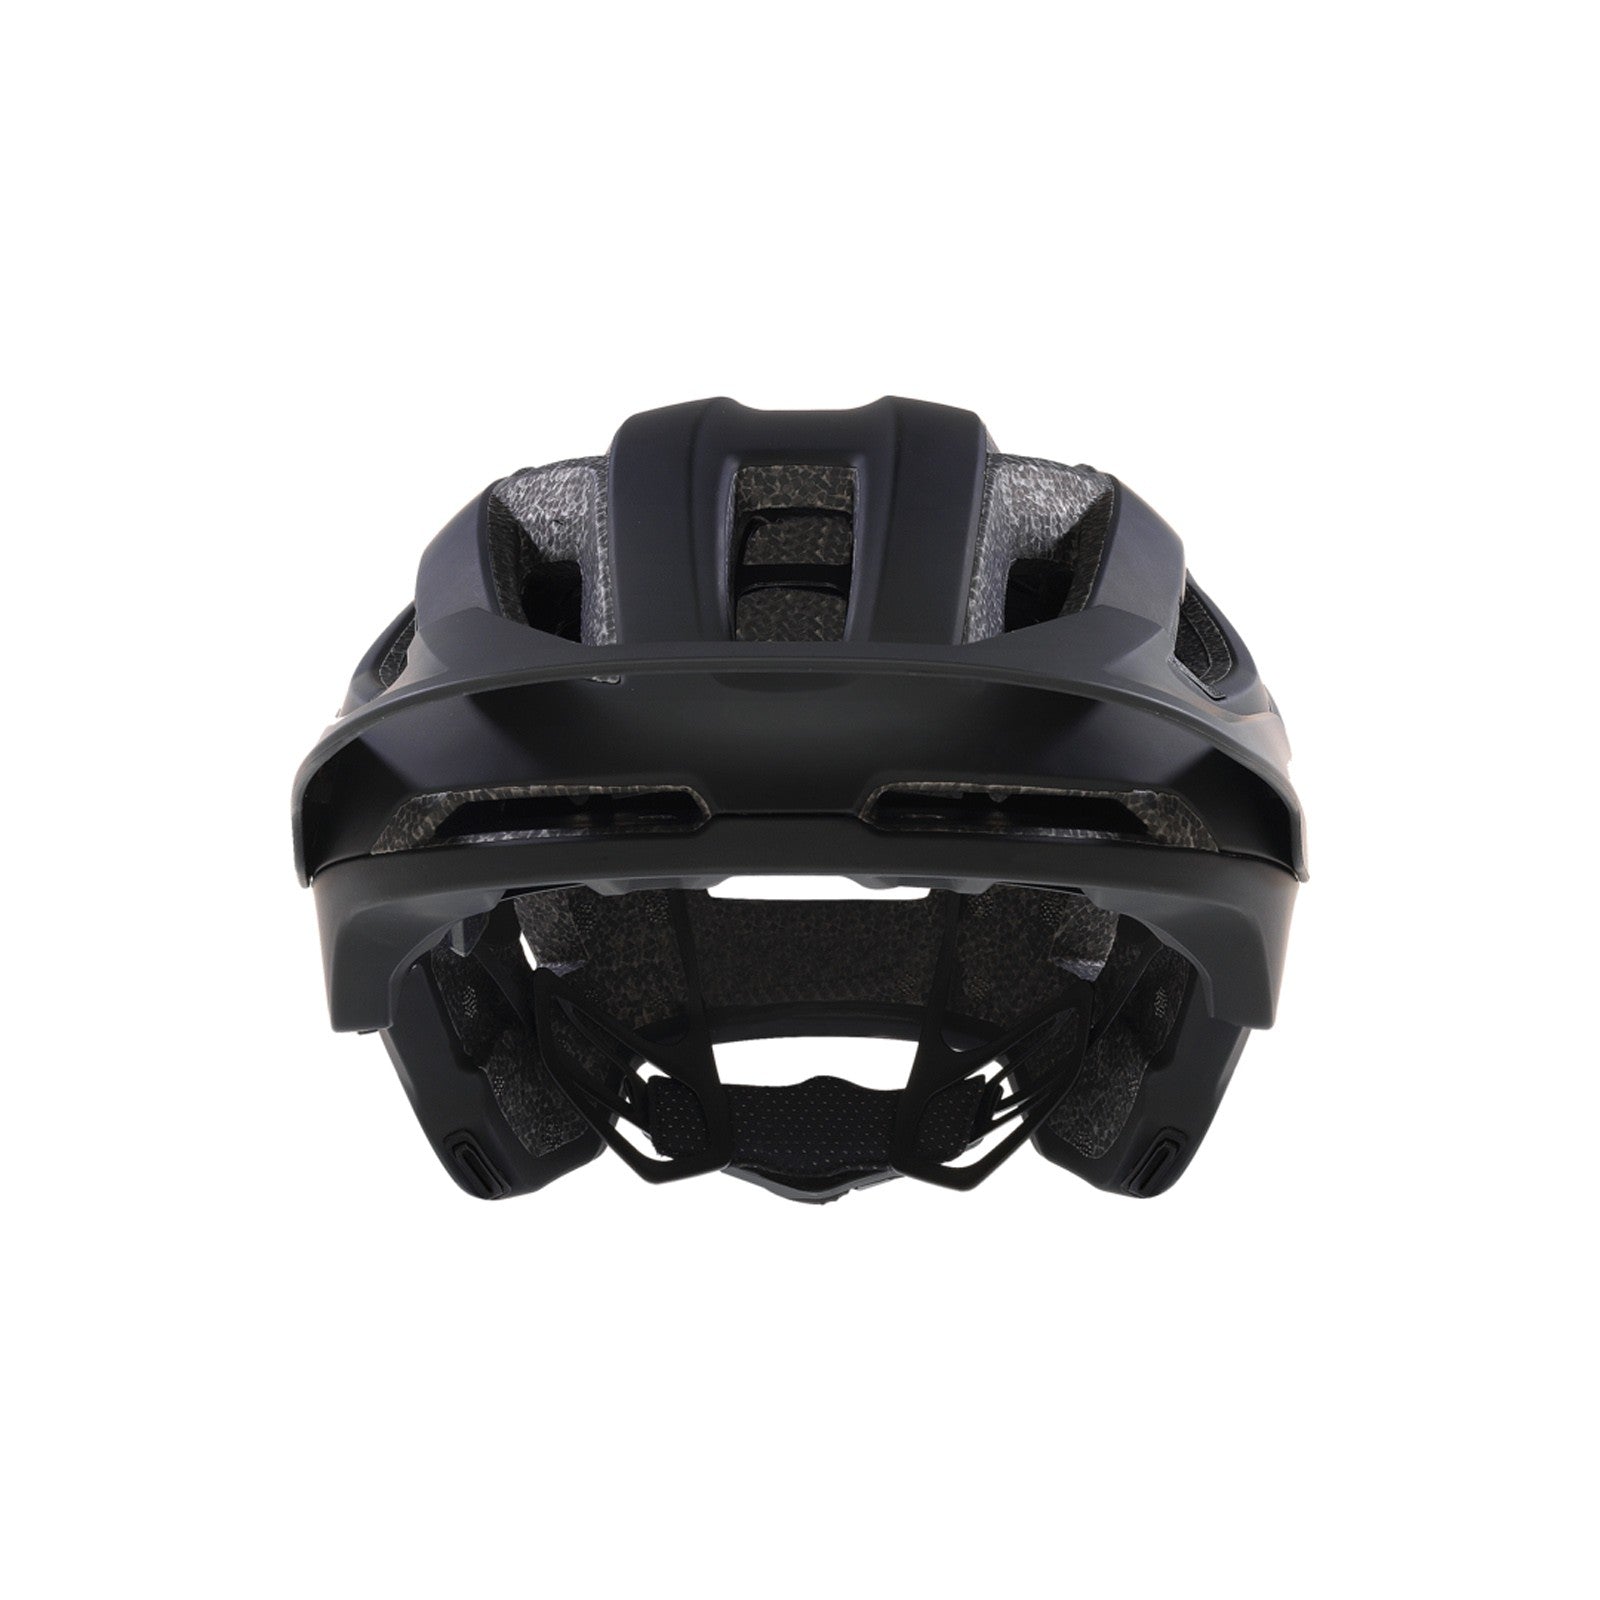 Drt3 Trail Cycling Helmet